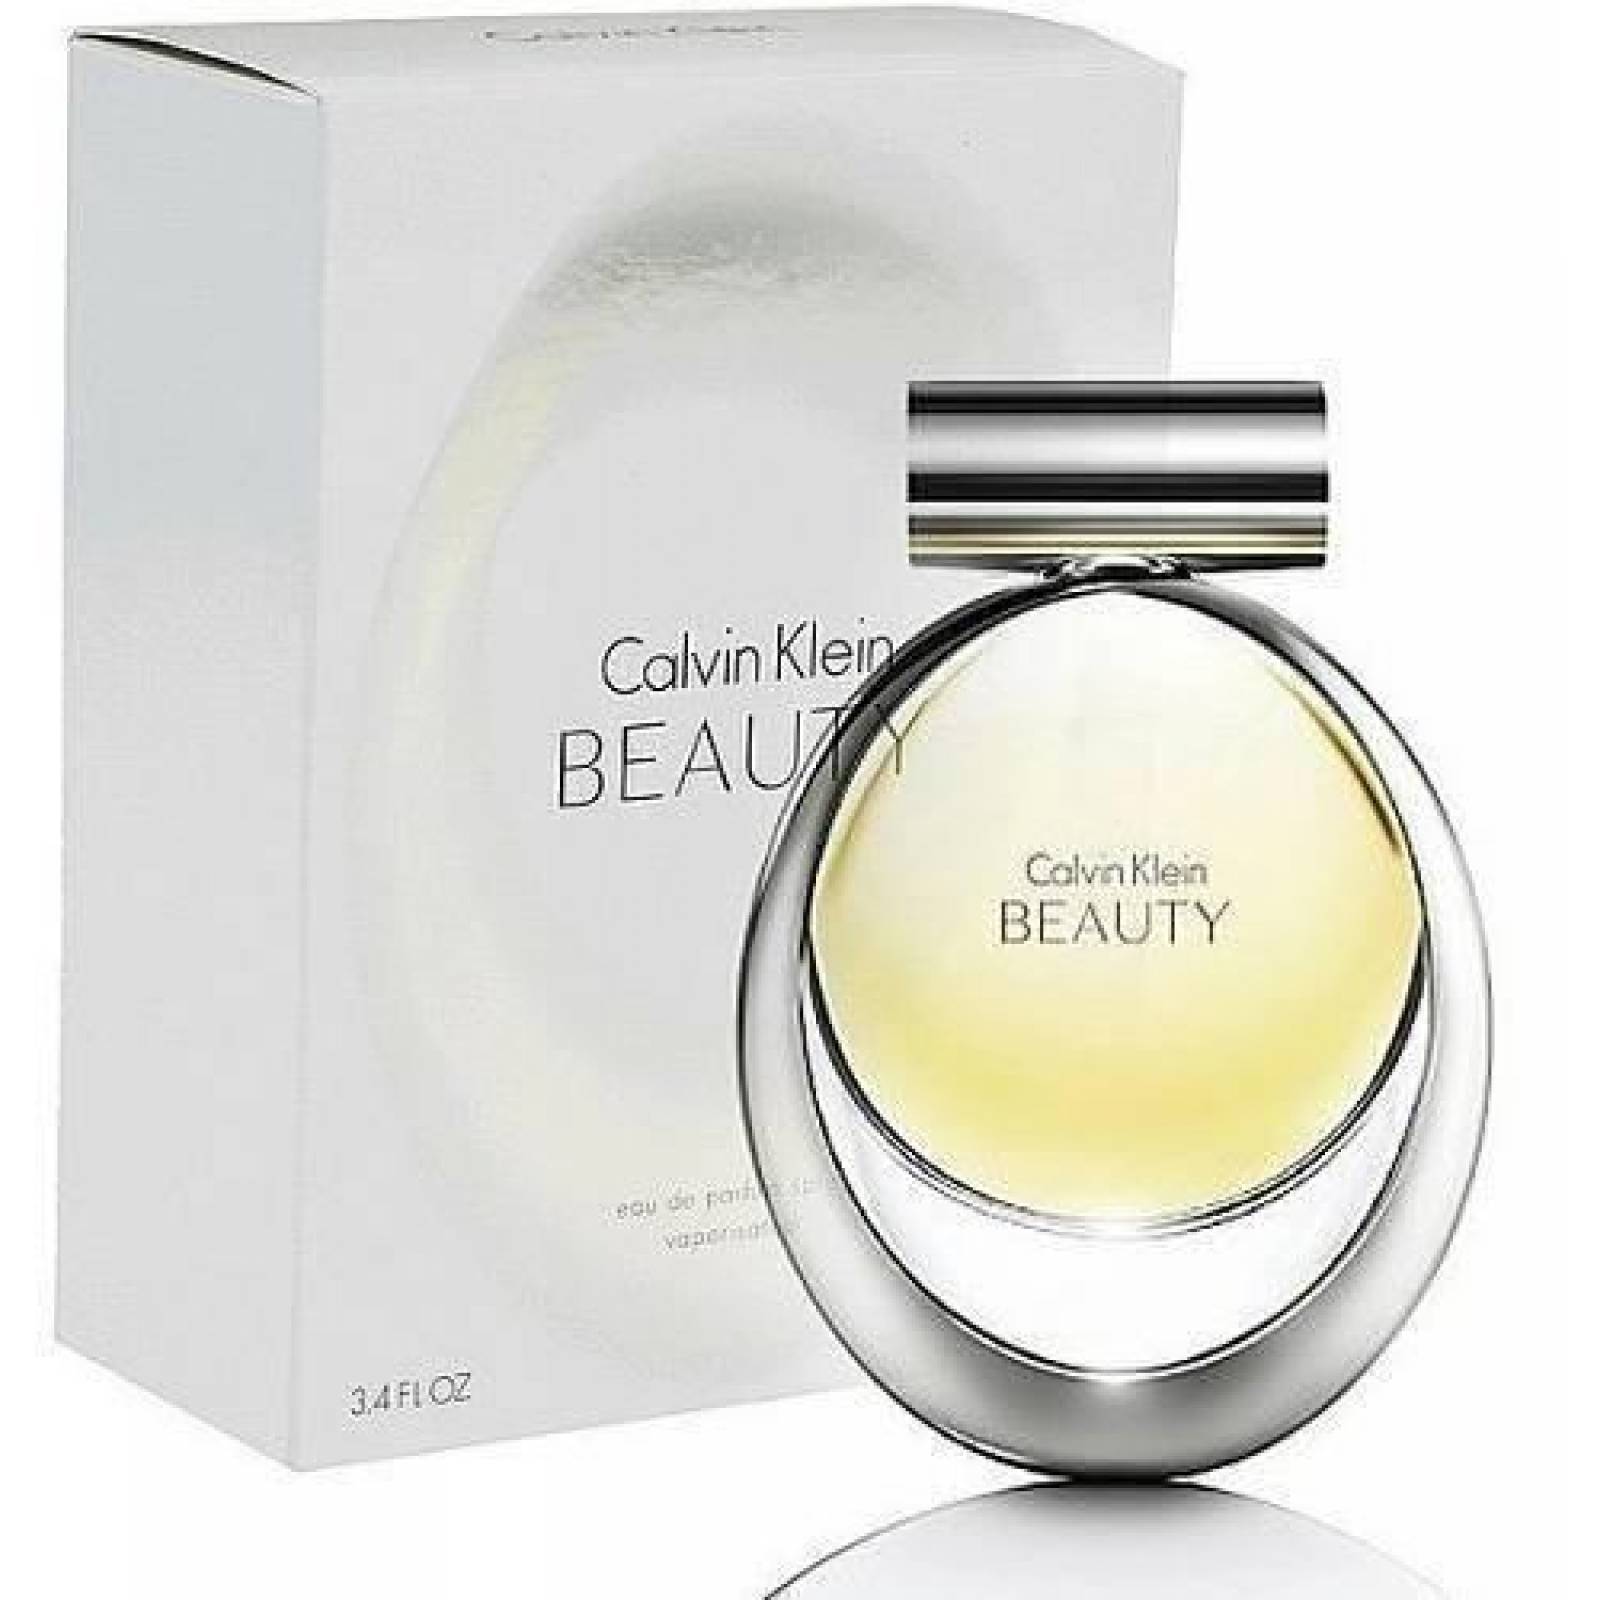 Ck Beauty Dama Calvin Klein 100 Ml Spray - Perfume Original